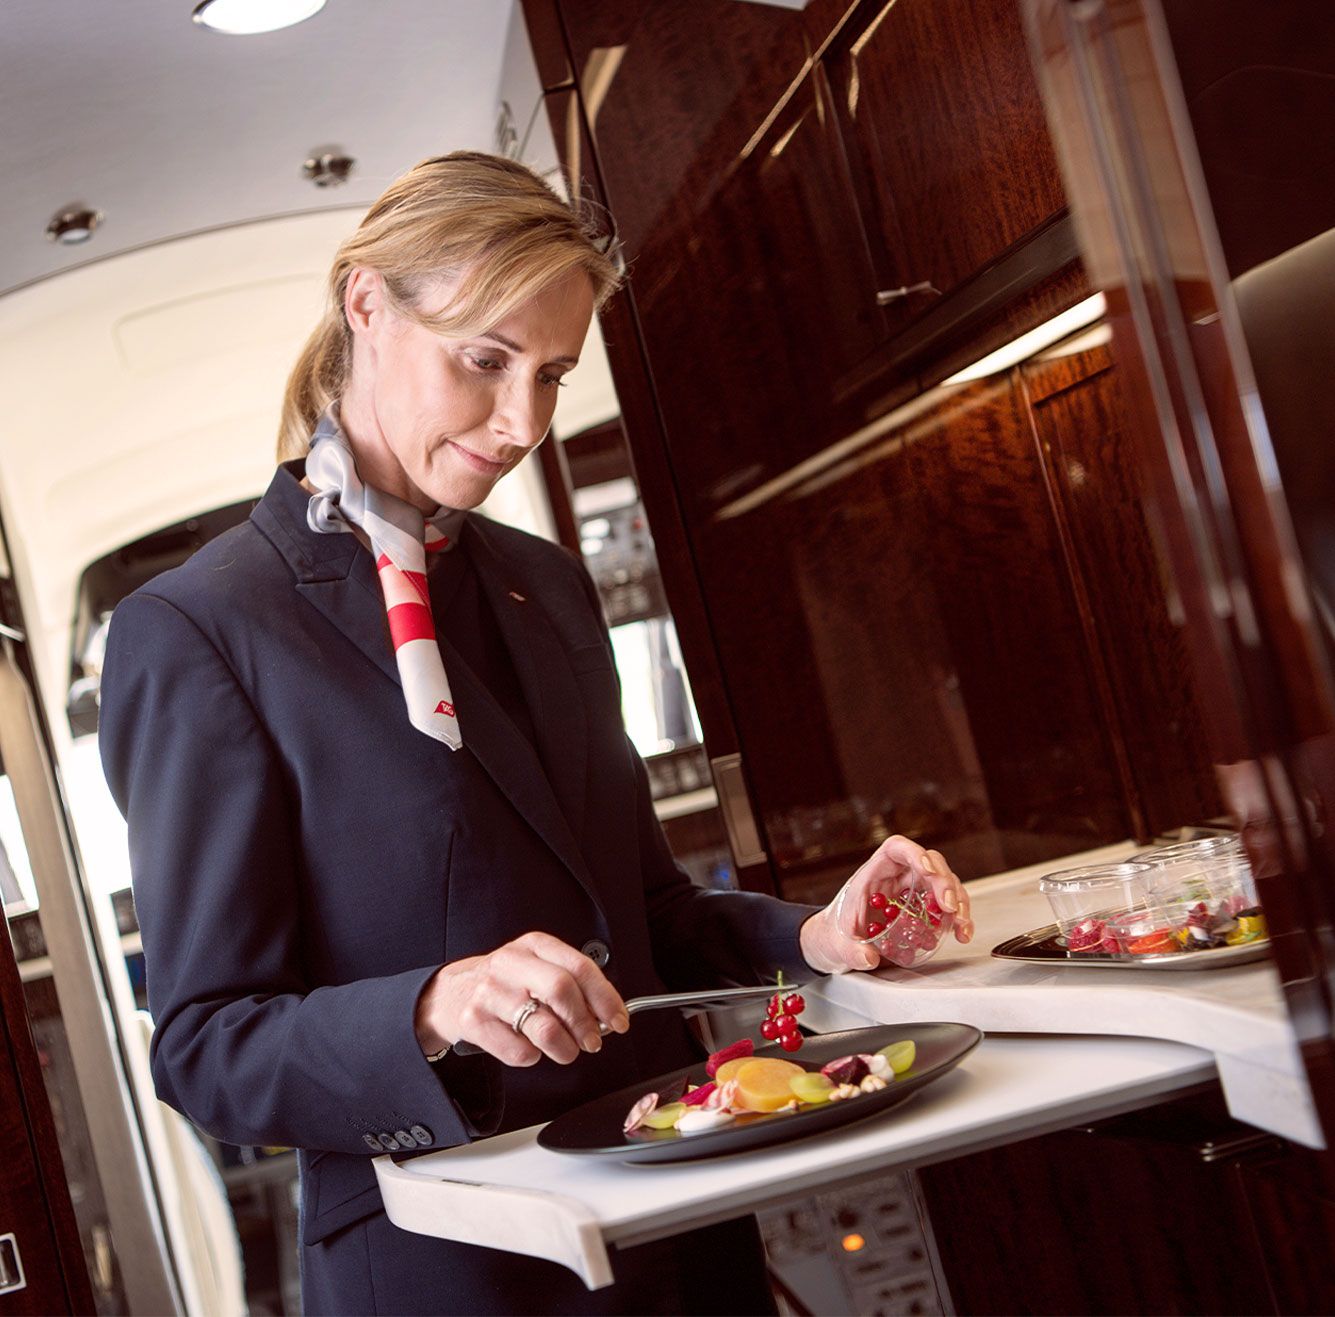 A private jet flight attendant preparing meals.